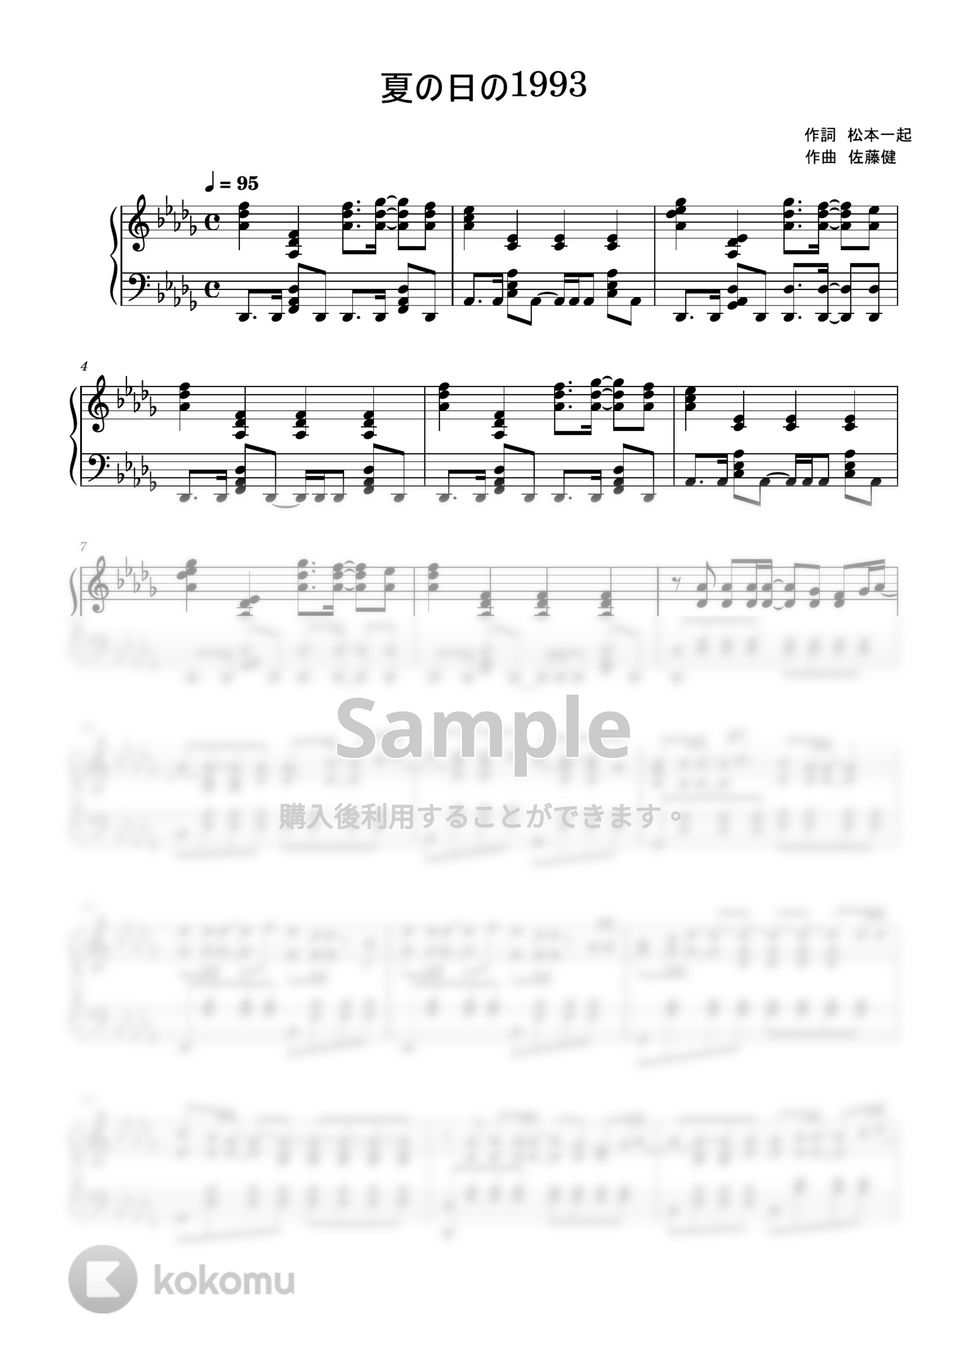 class - 夏の日の1993 (ピアノ、CLASS) by MIKA